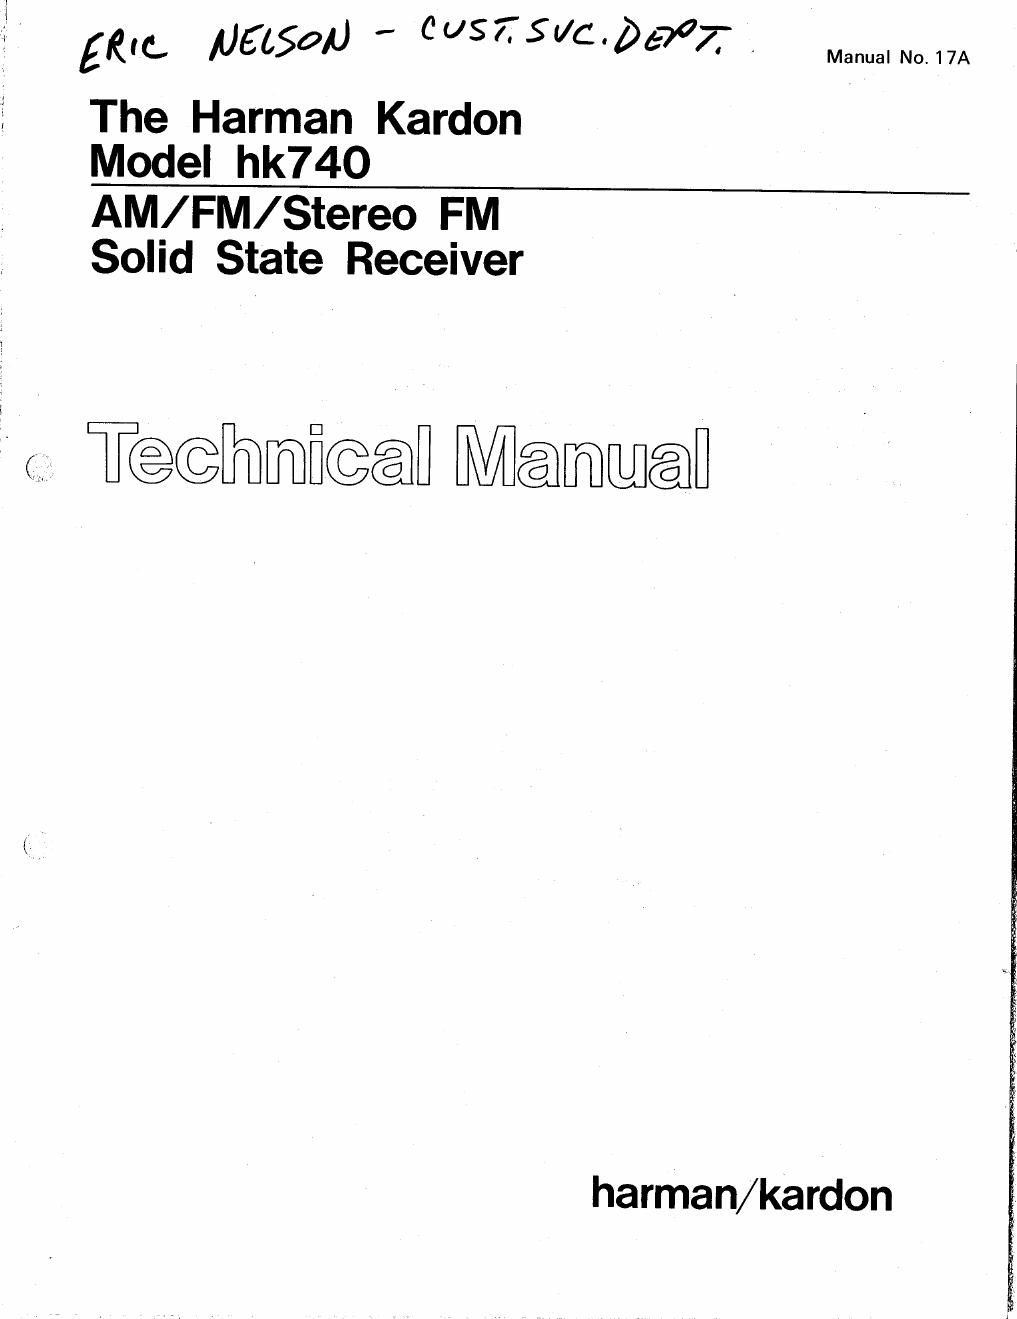 harman kardon hk 740 service manual